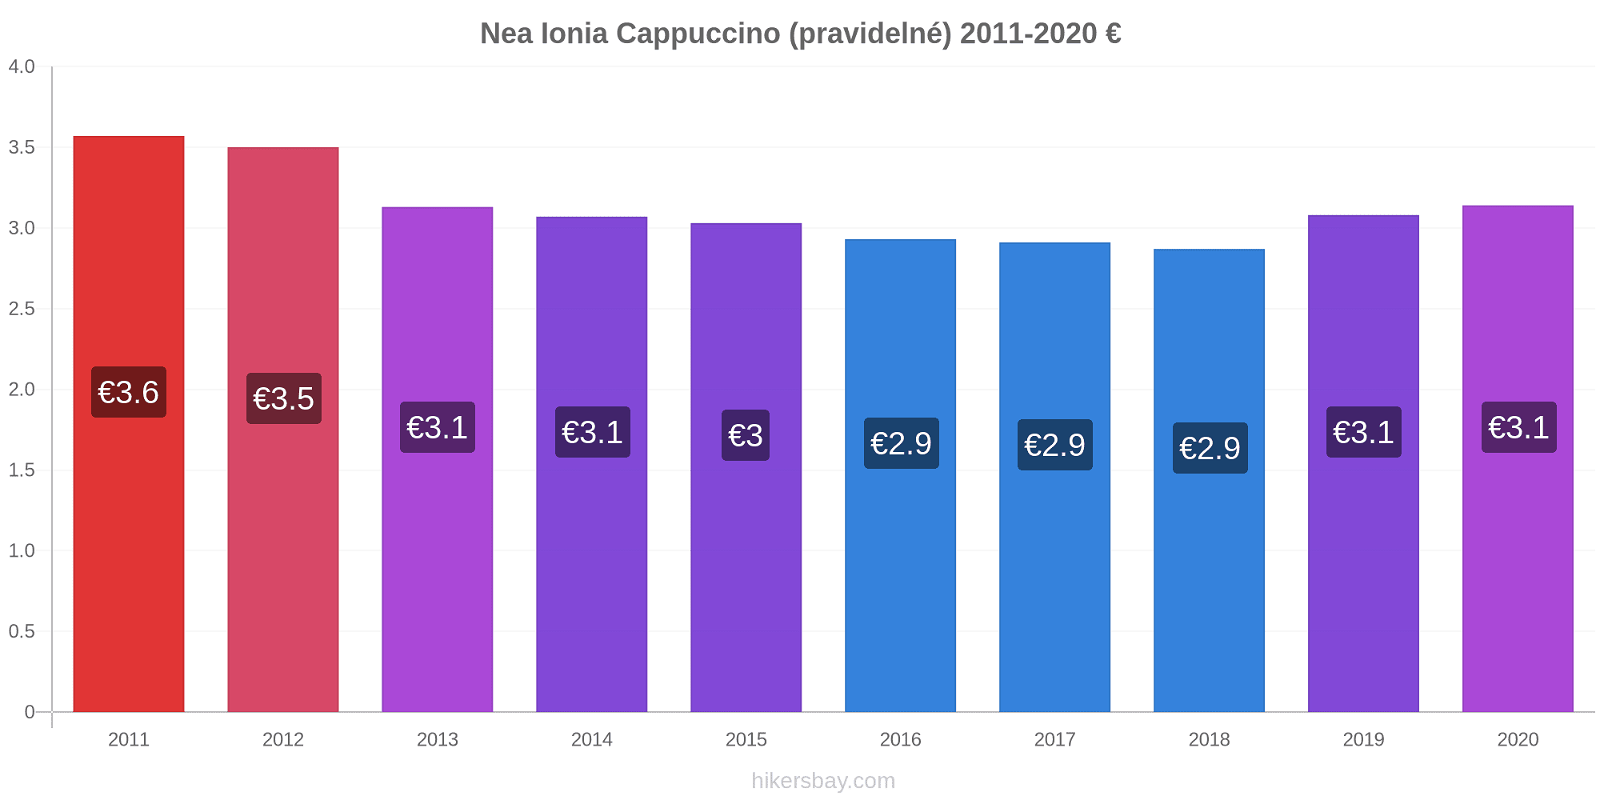 Nea Ionia změny cen Cappuccino (pravidelné) hikersbay.com